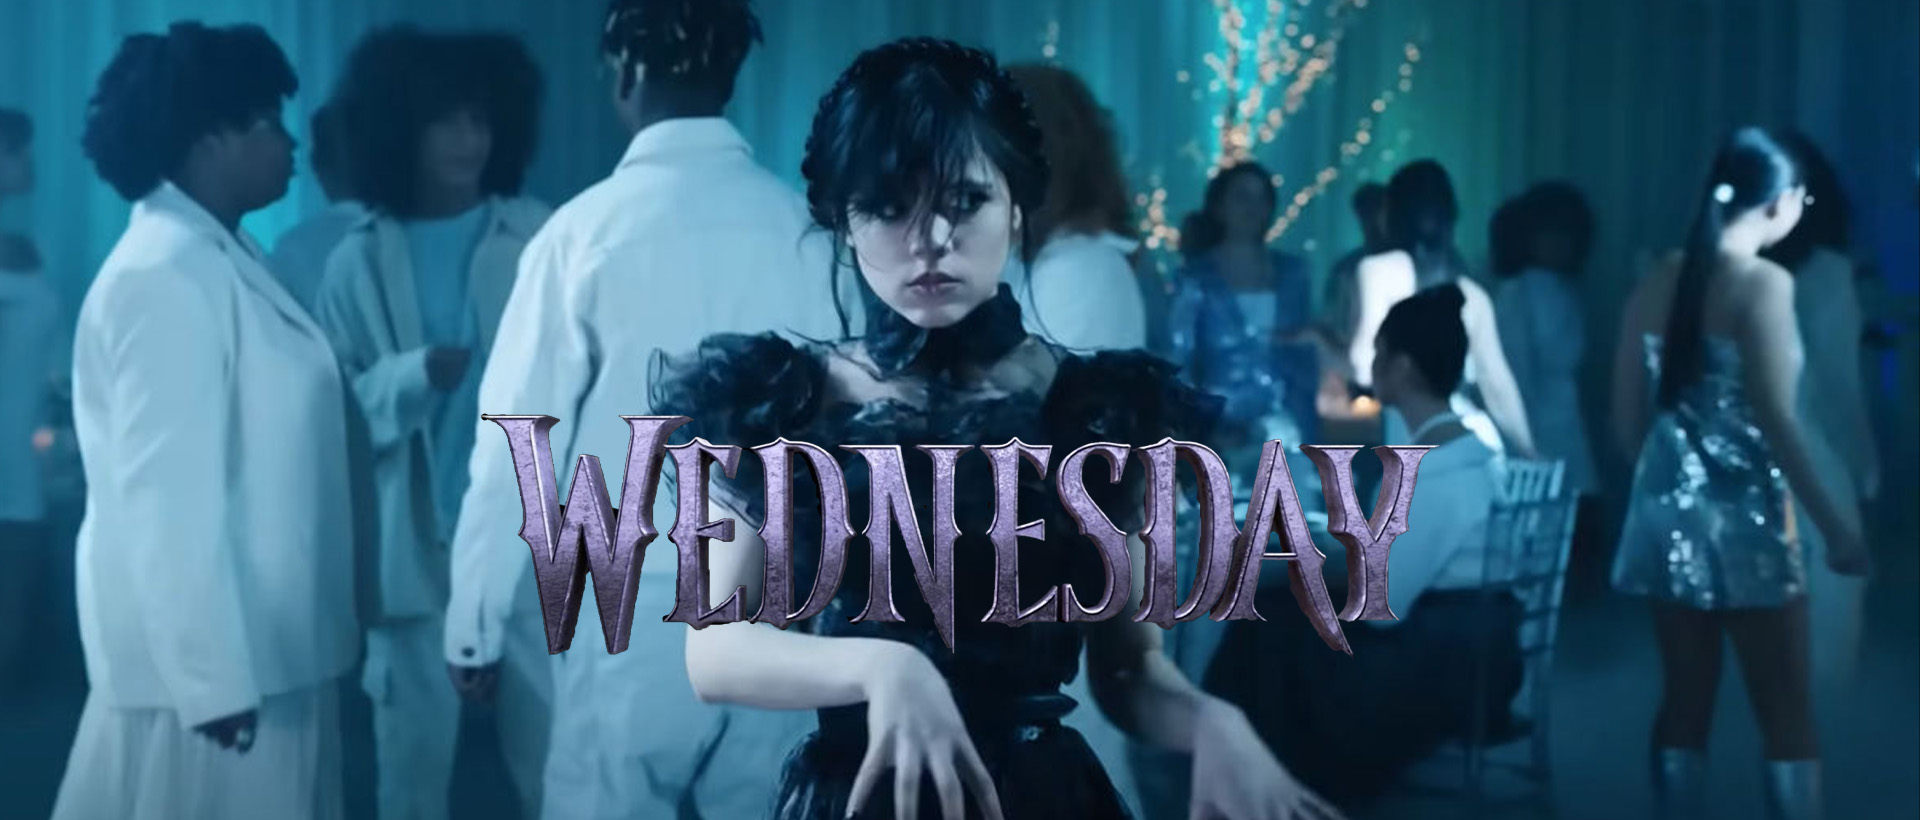 Netflix Announces 'Wednesday' Returning For Season 2 - Knight Edge Media